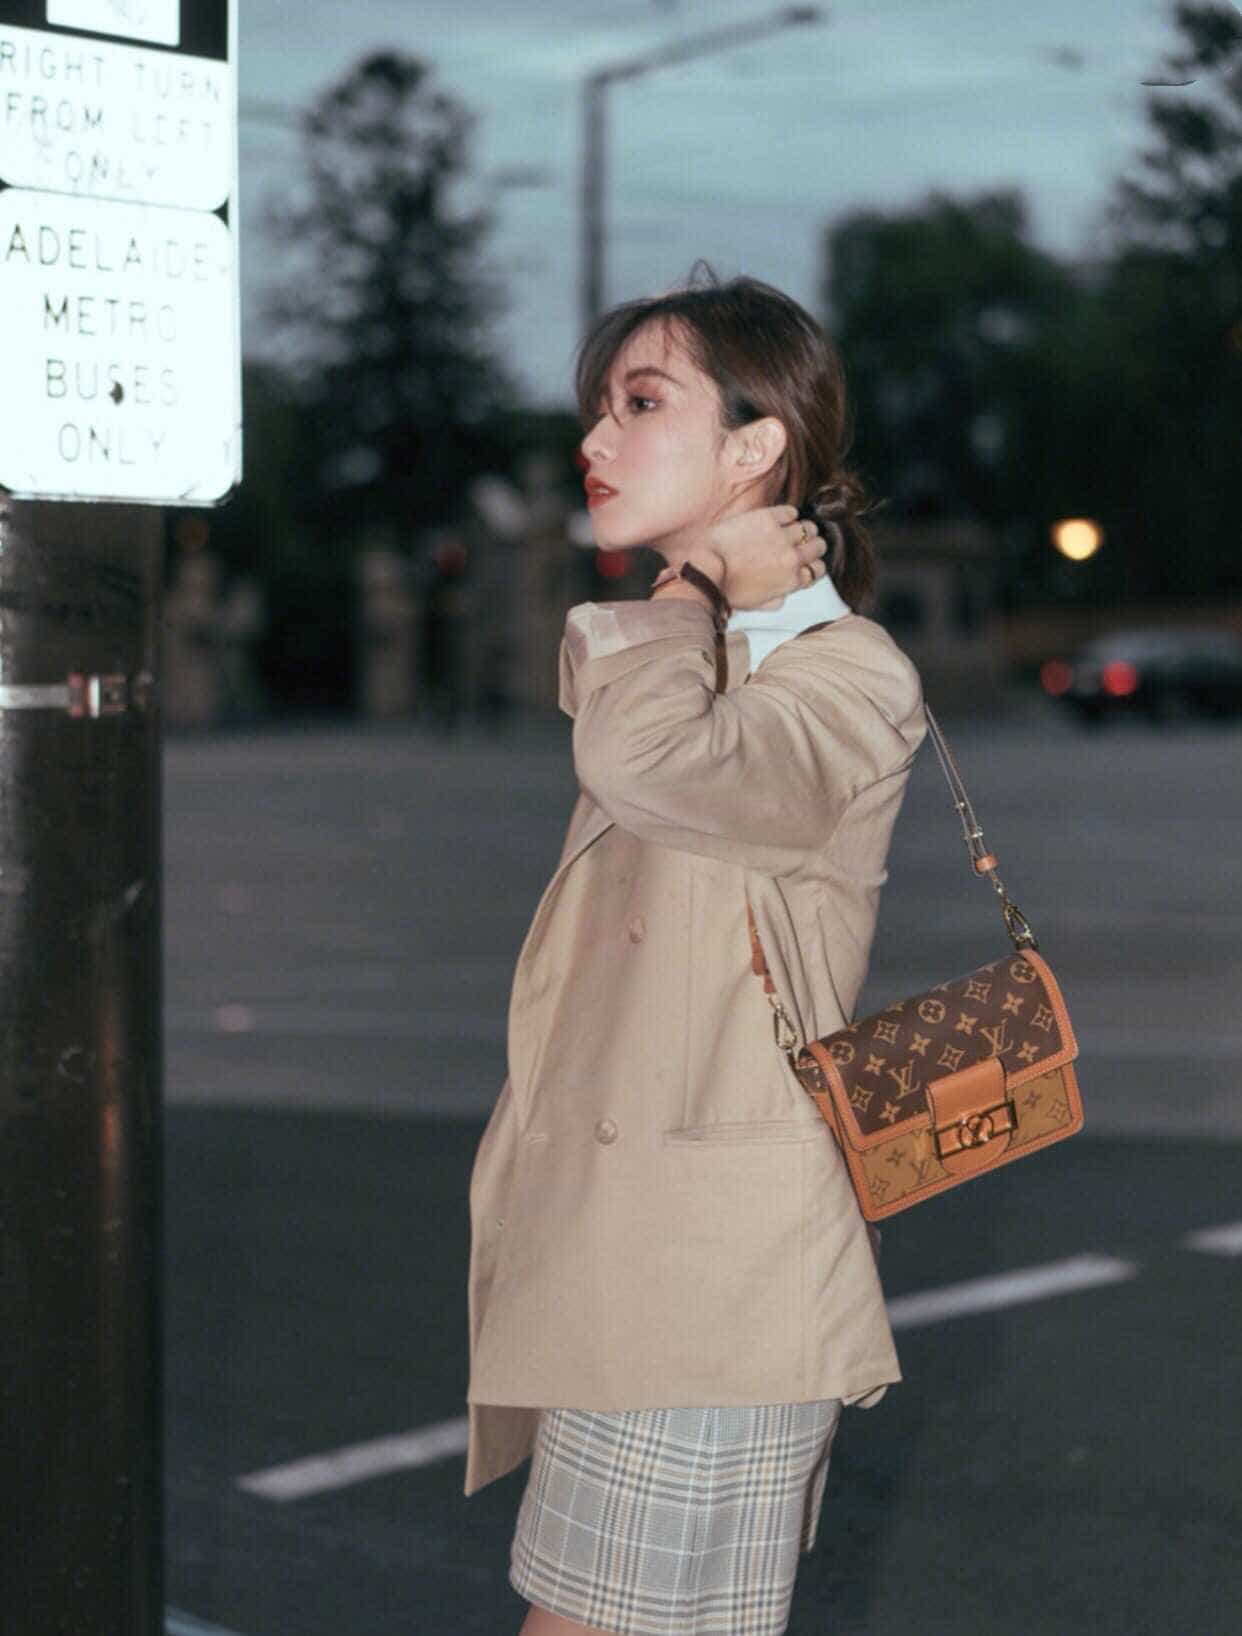 Mini Dauphine Epi Leather - Women - Handbags